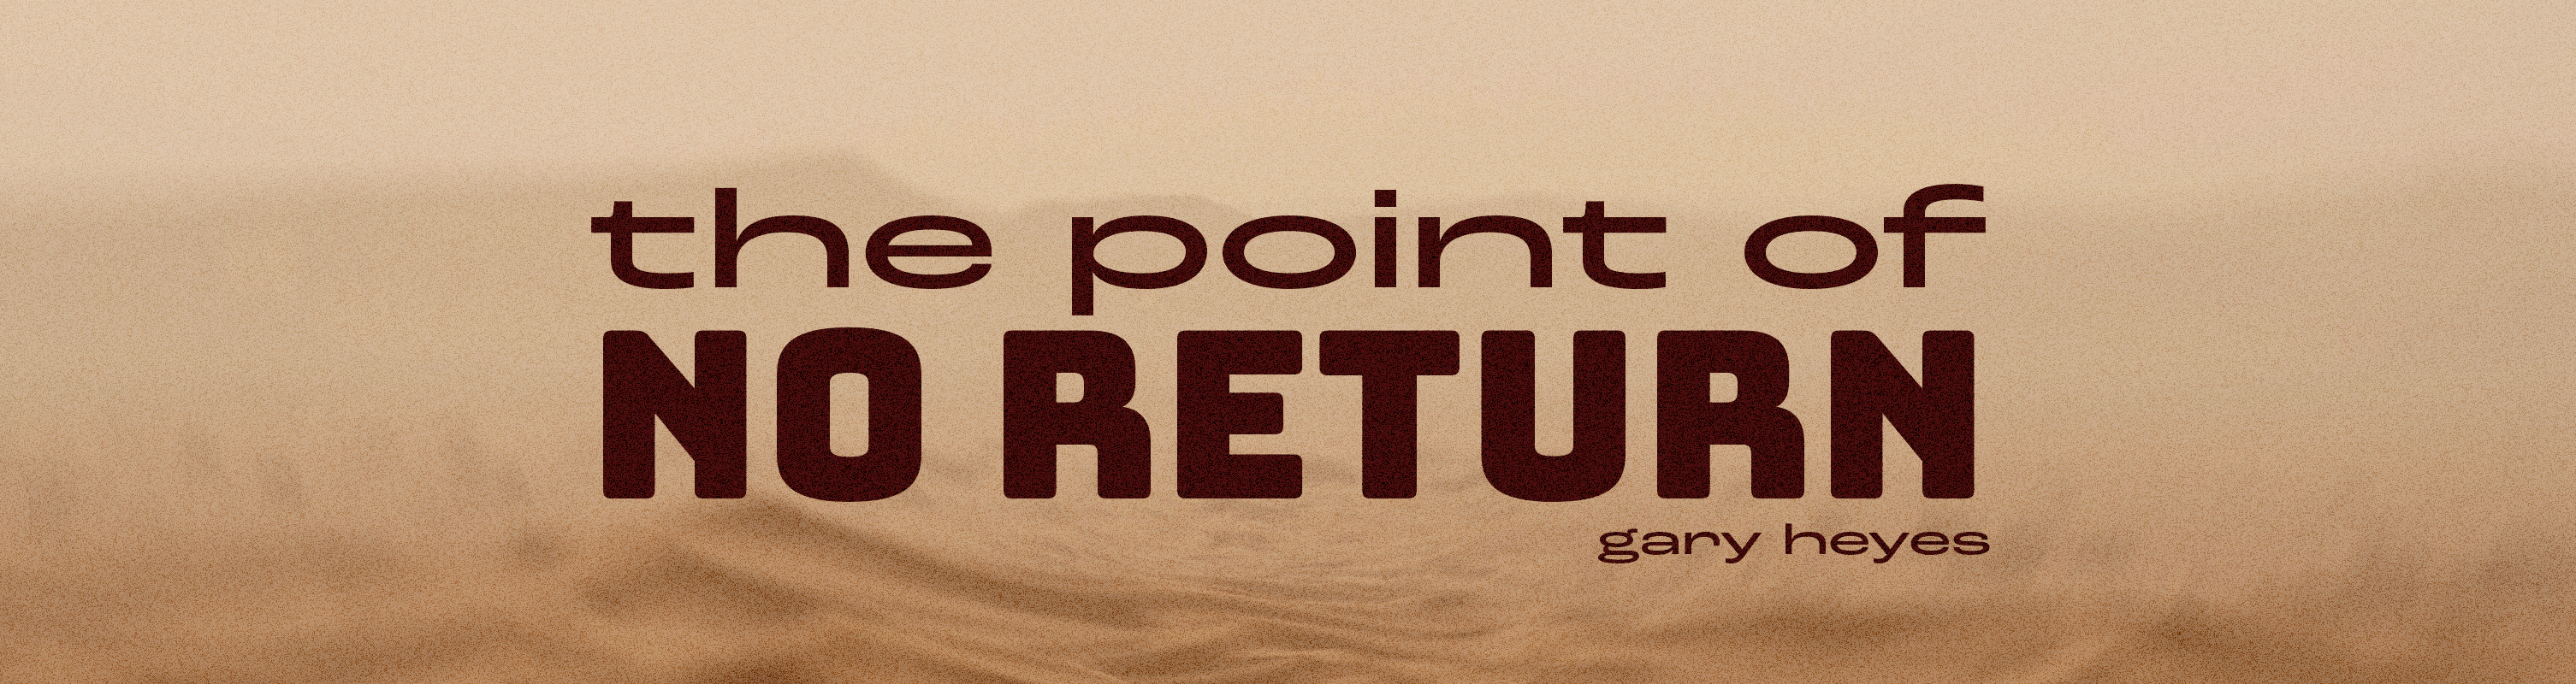 Point of no return pro